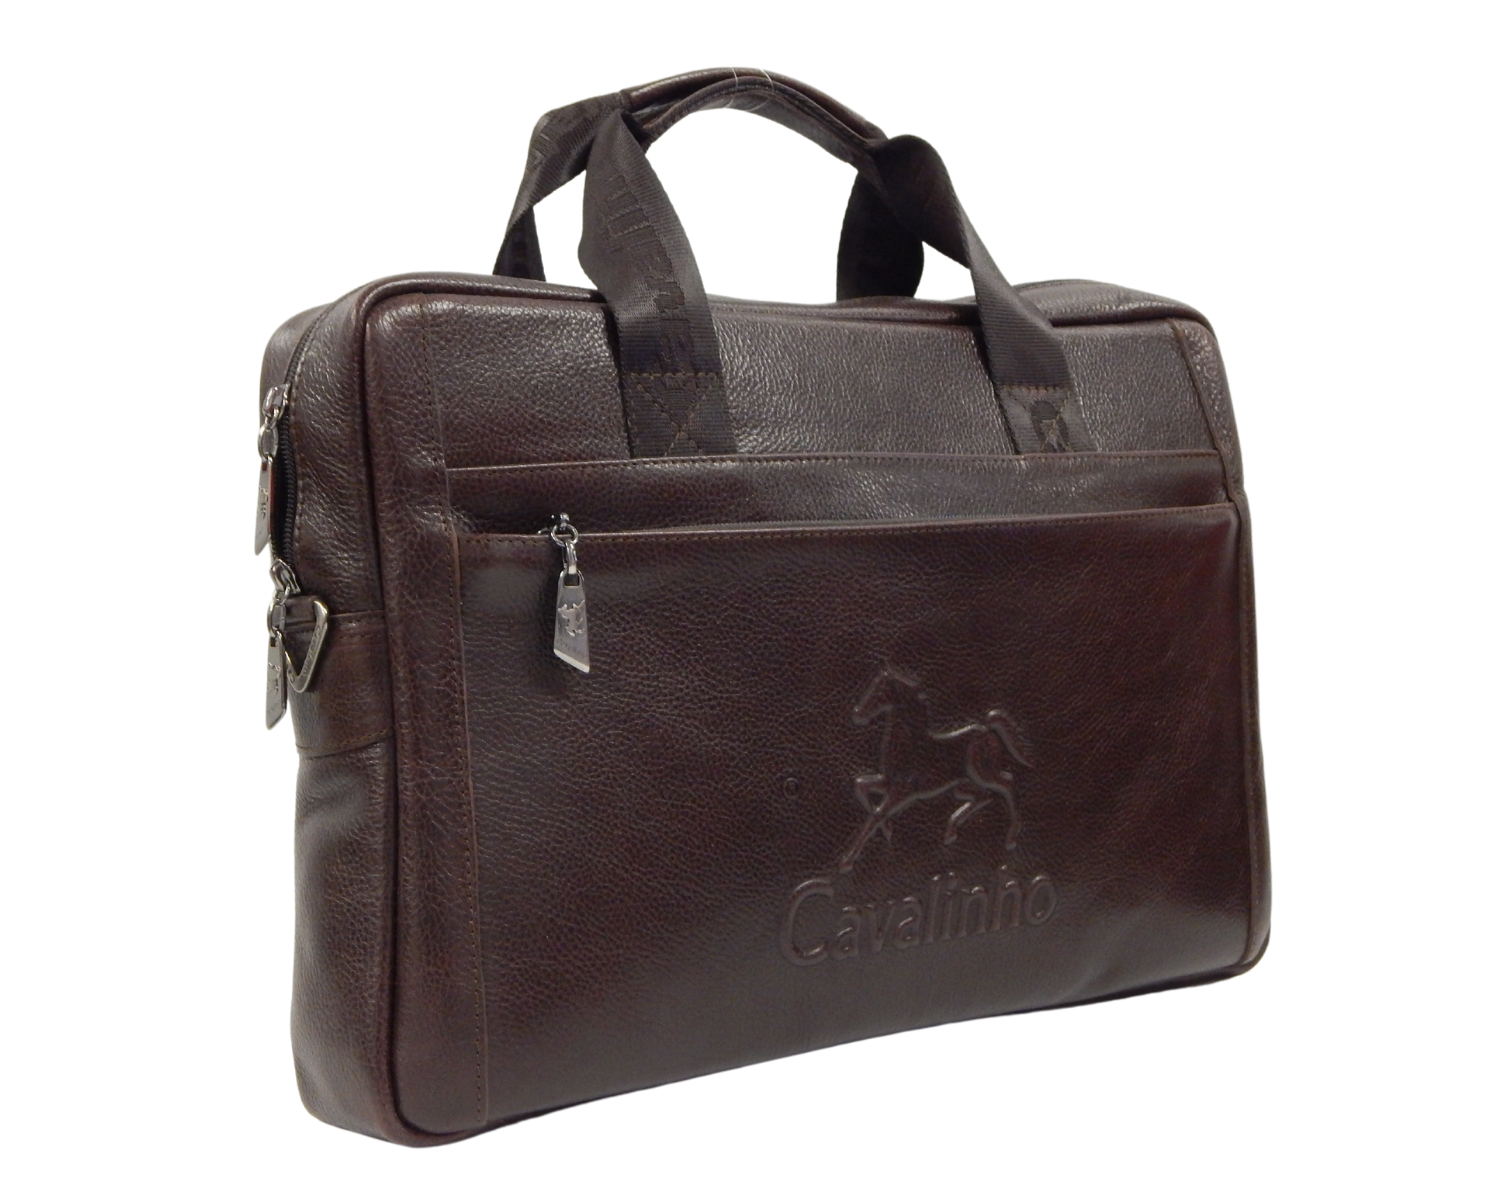 Cavalinho Leather Laptop Bag 16" - Brown - 18320257.02_P02